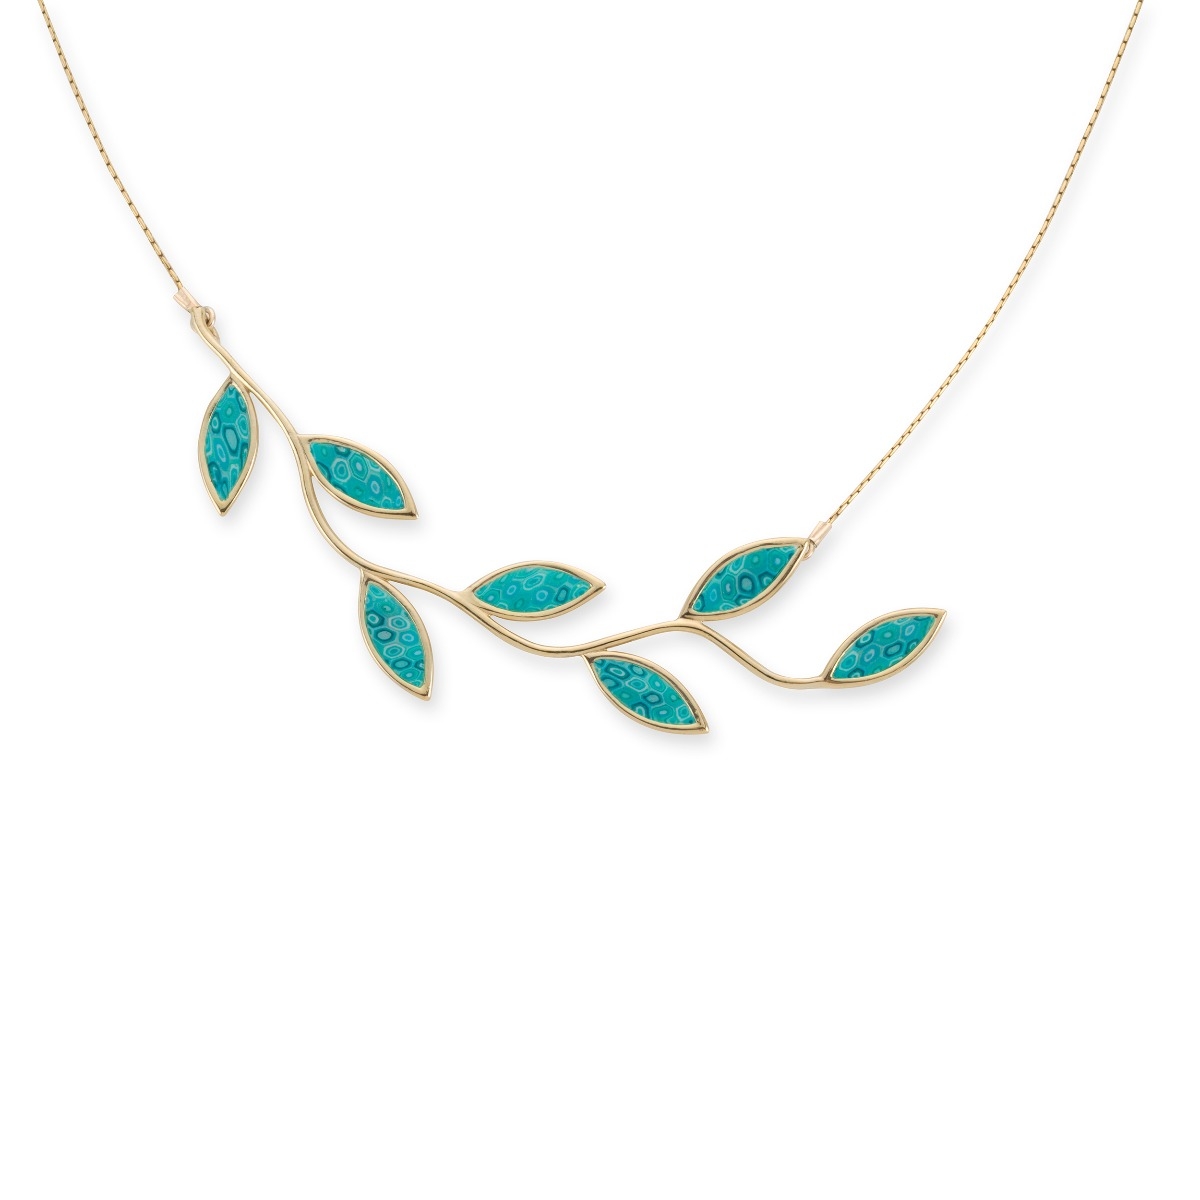 Adina Plastelina 24K Gold Plated Olive Branch Necklace - Turquoise - 1